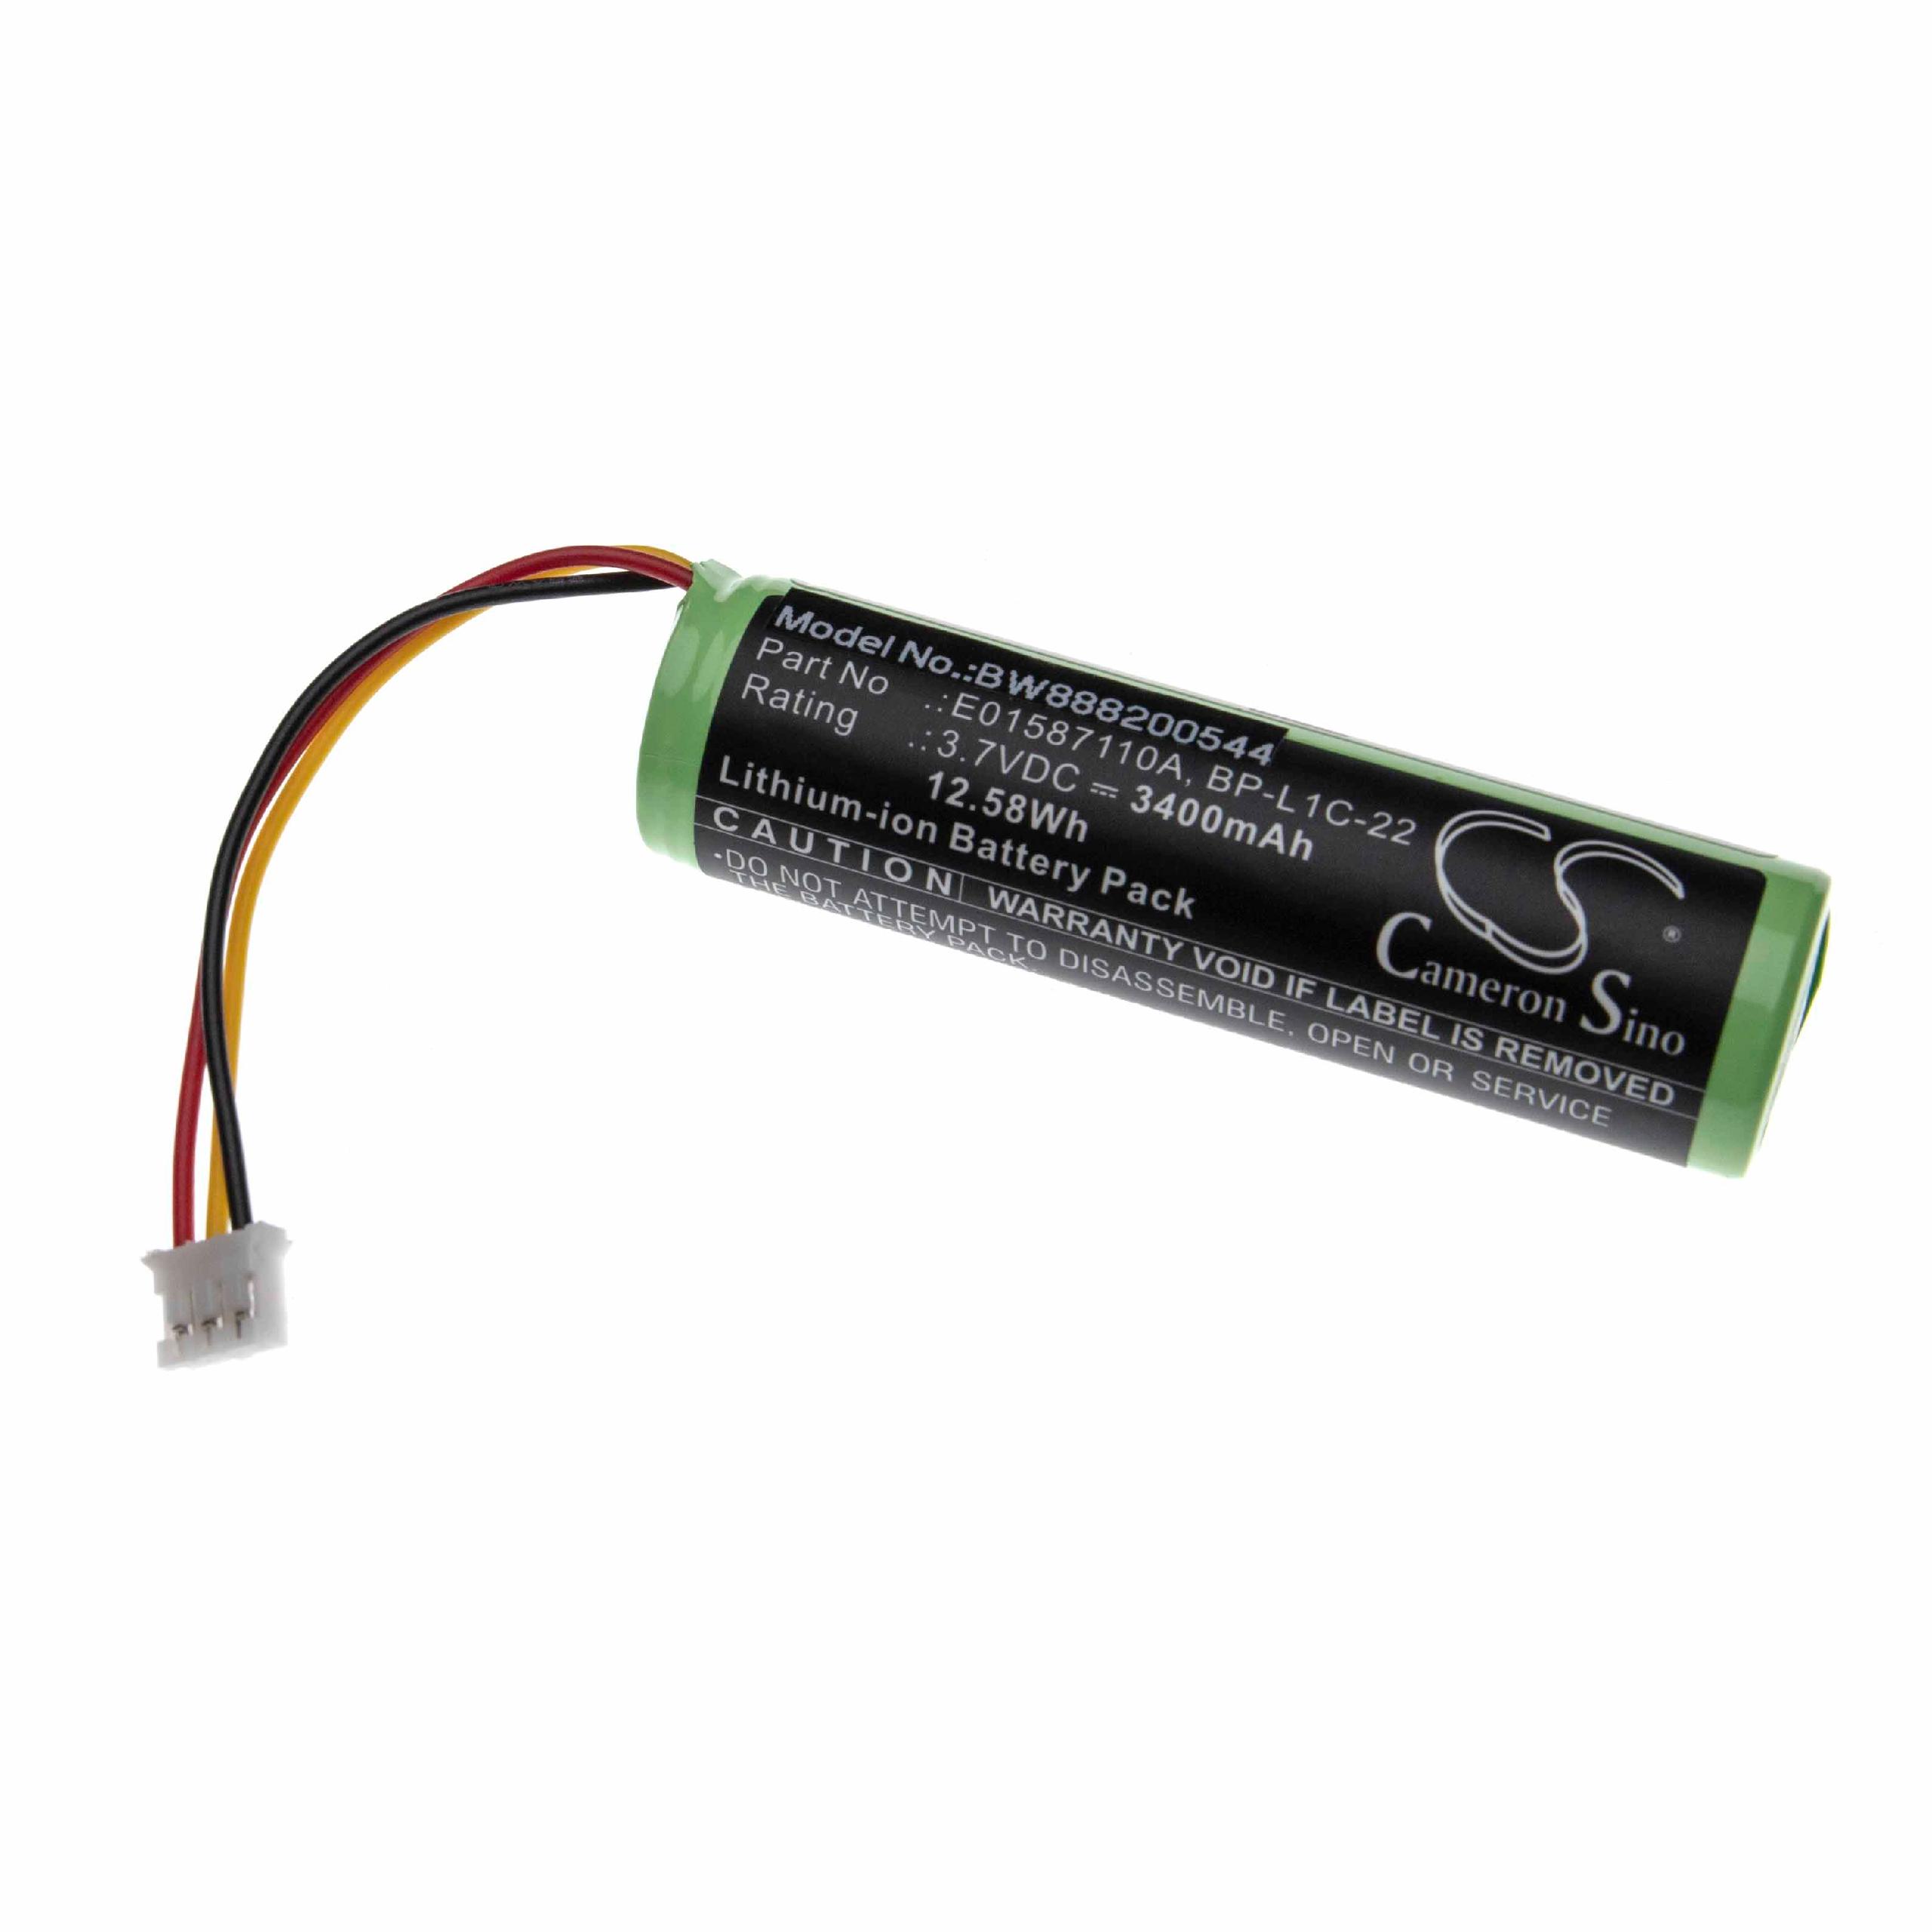 Akumulator do odtwarzacza MP3 zamiennik Tascam E01587110A, BP-L1C-22 - 3400 mAh 3,7 V Li-Ion